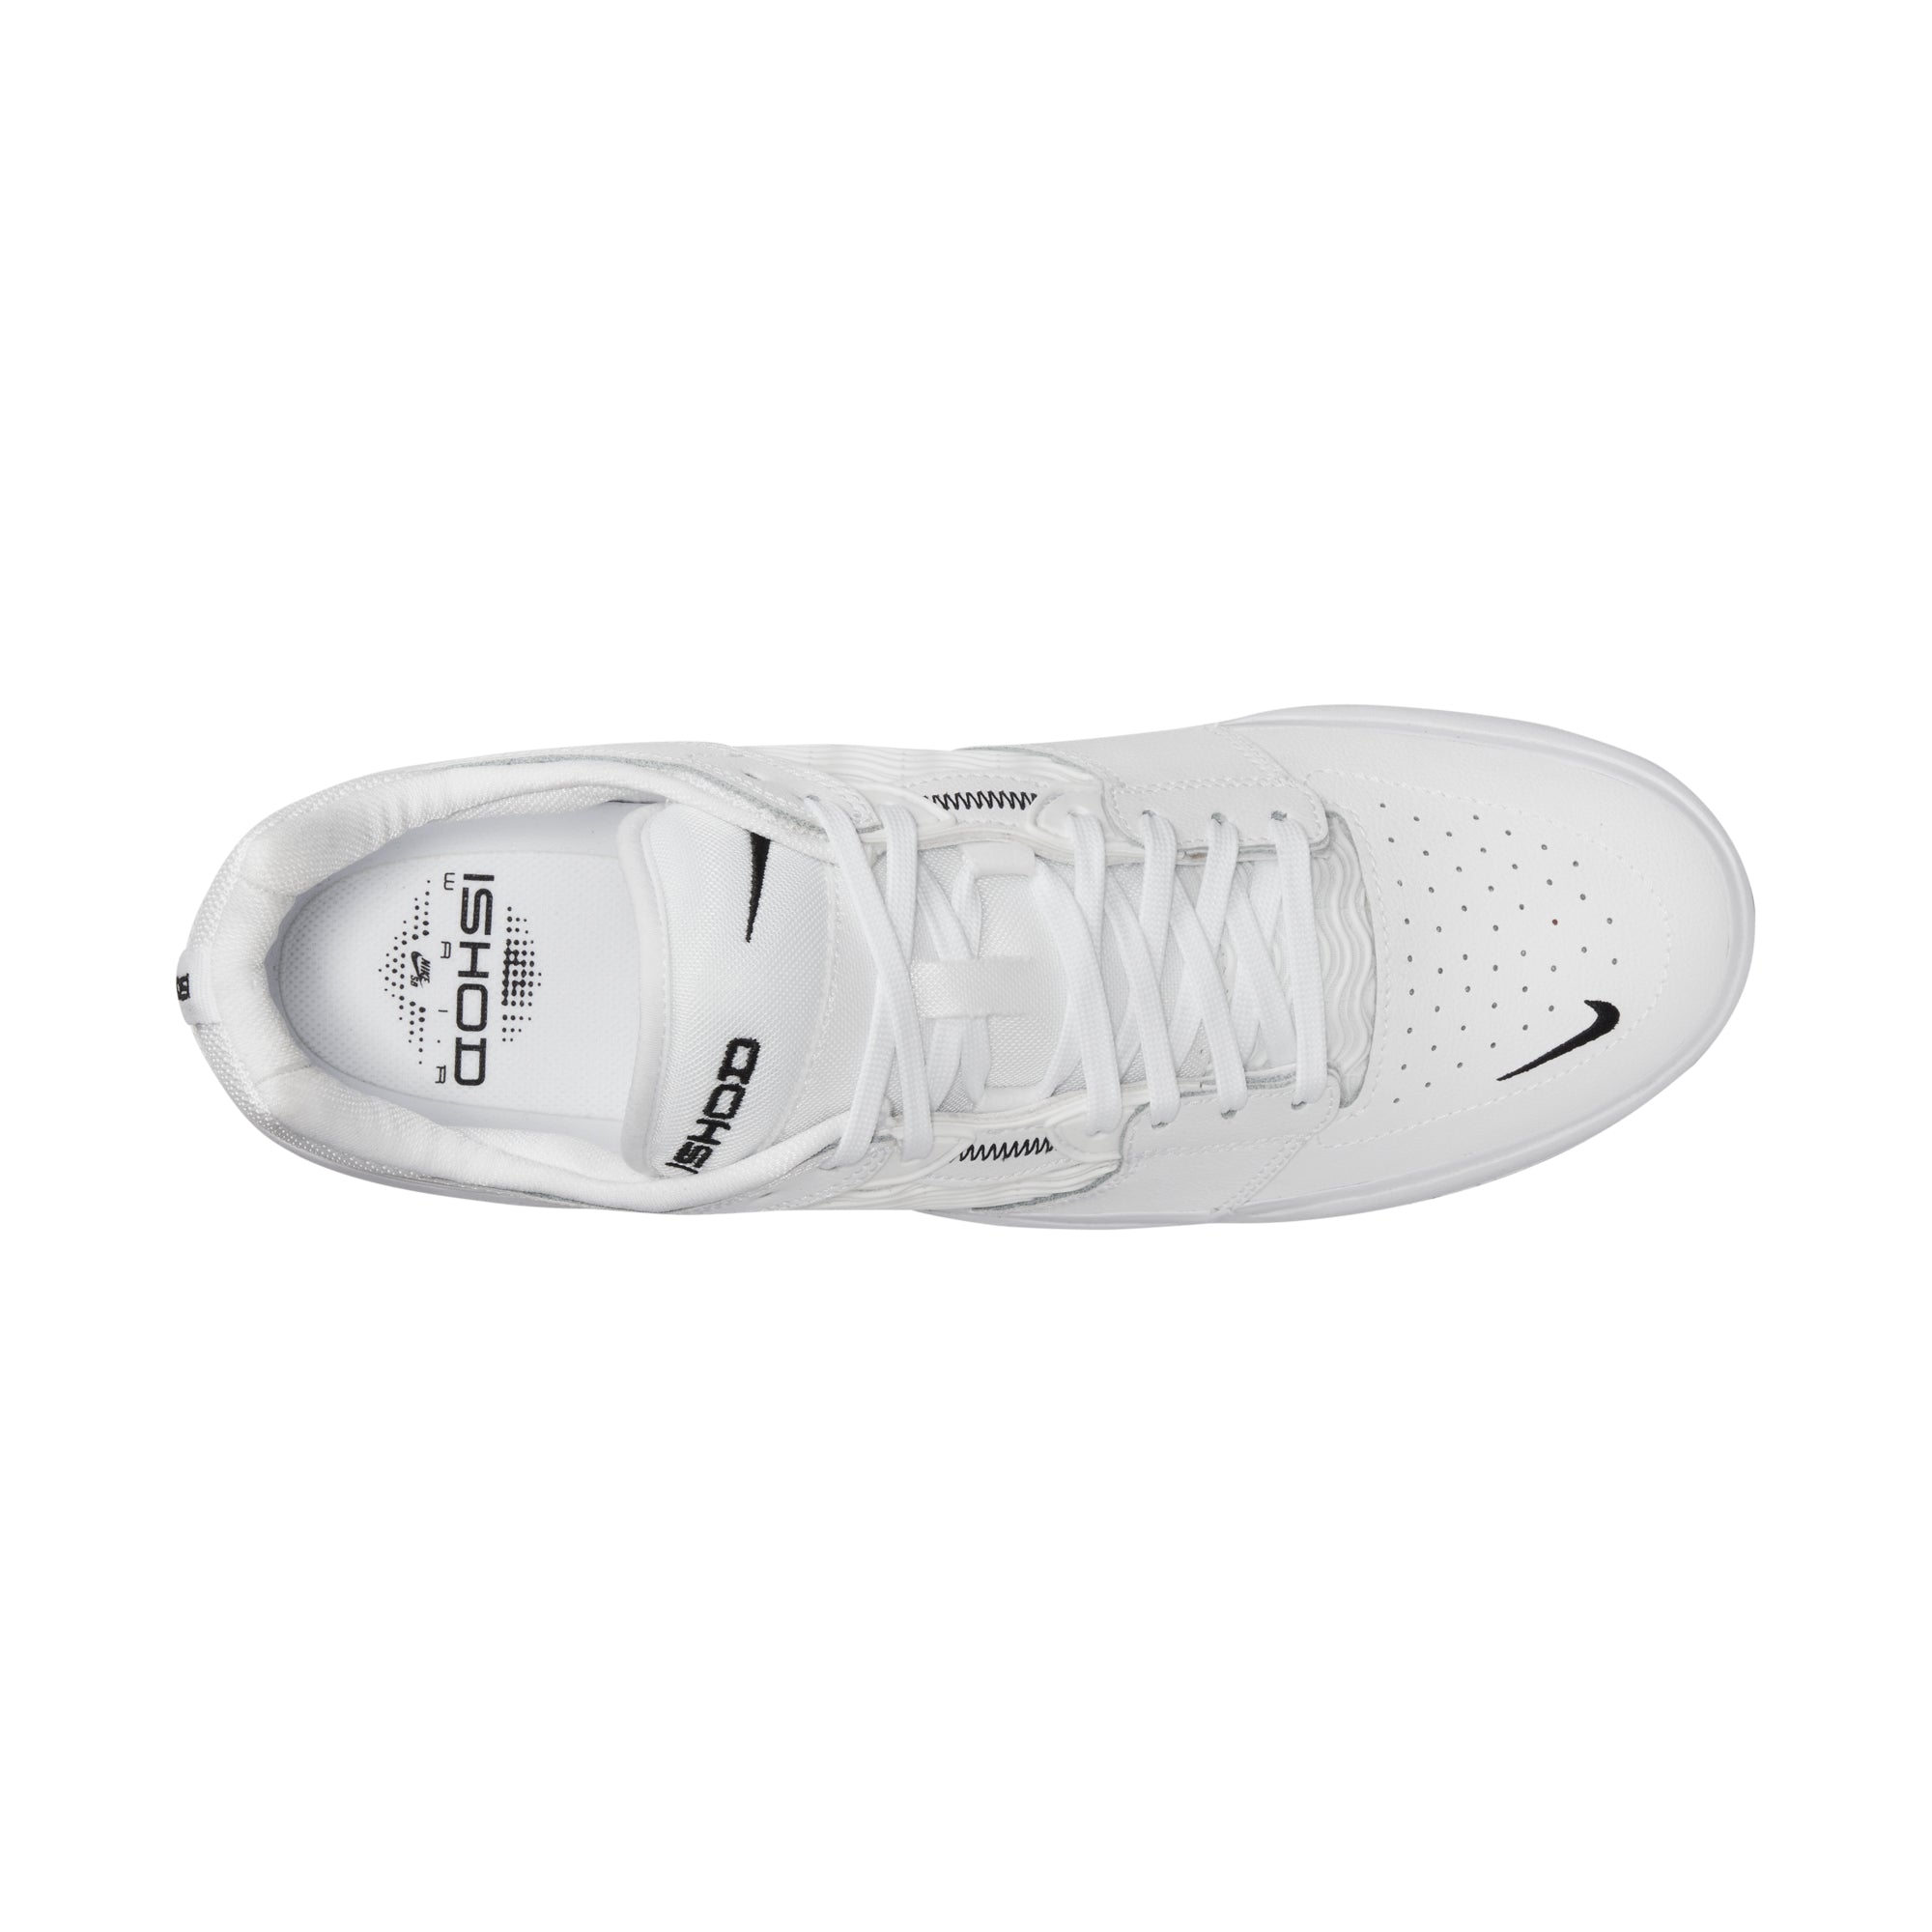 Nike SB Ishod Premium Pro Shoe - White/Black-White-Black